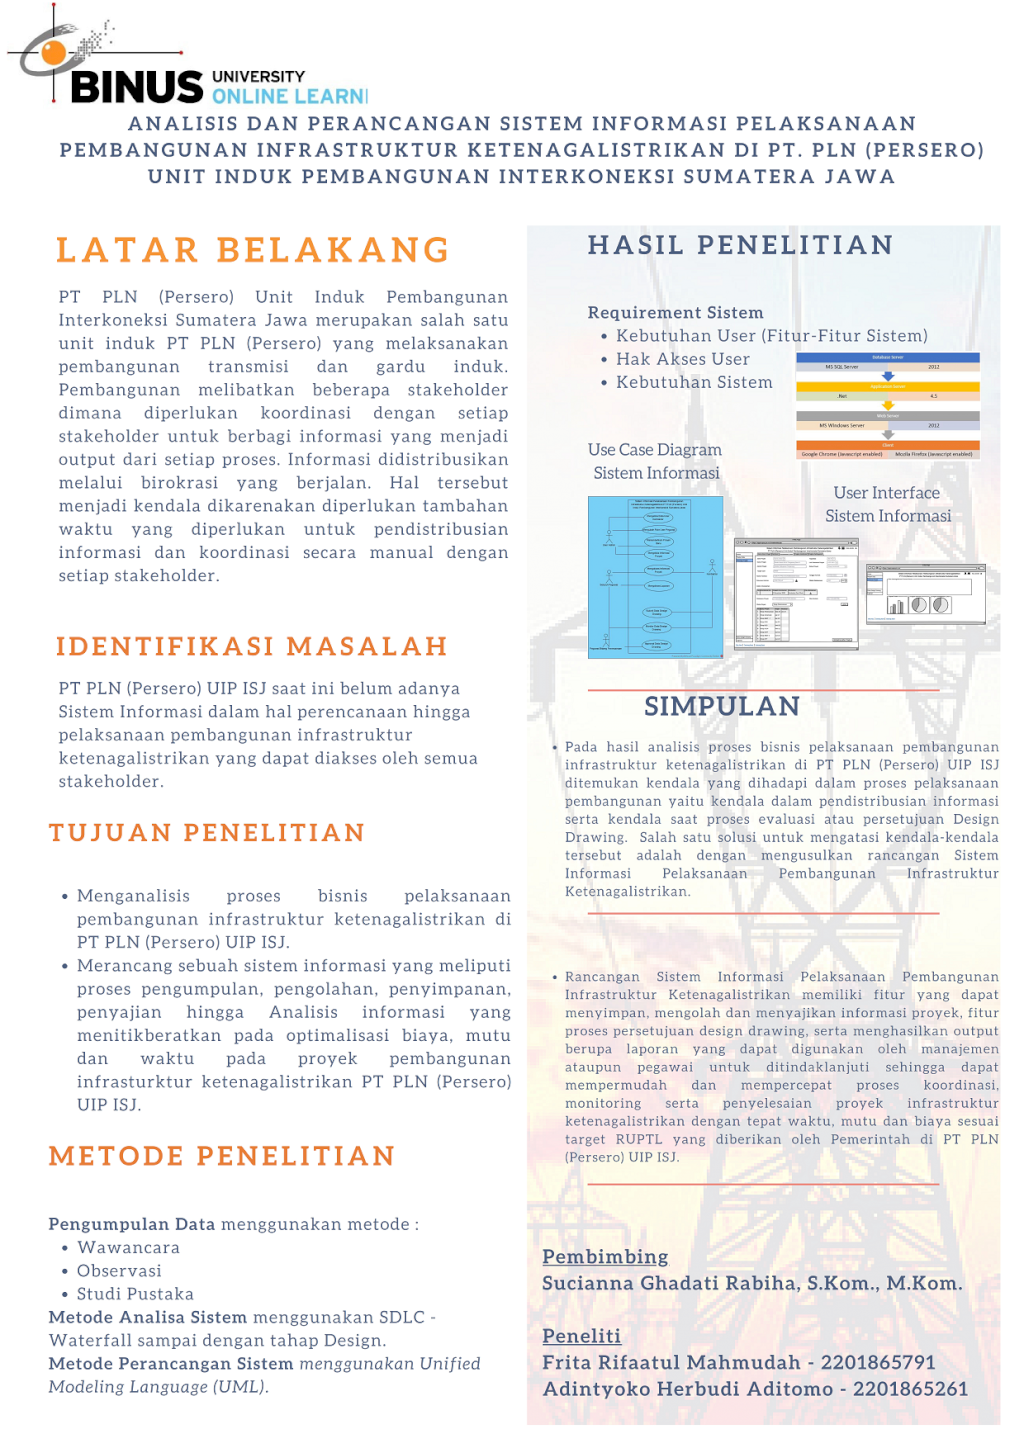 Analisis dan Perancangan Sistem Informasi Pelaksanaan Pembangunan Infrastruktur Ketenagalistrikan di PT. PLN(Persero) Unit Induk Pembangunan Interkoneksi Sumatera Jawa